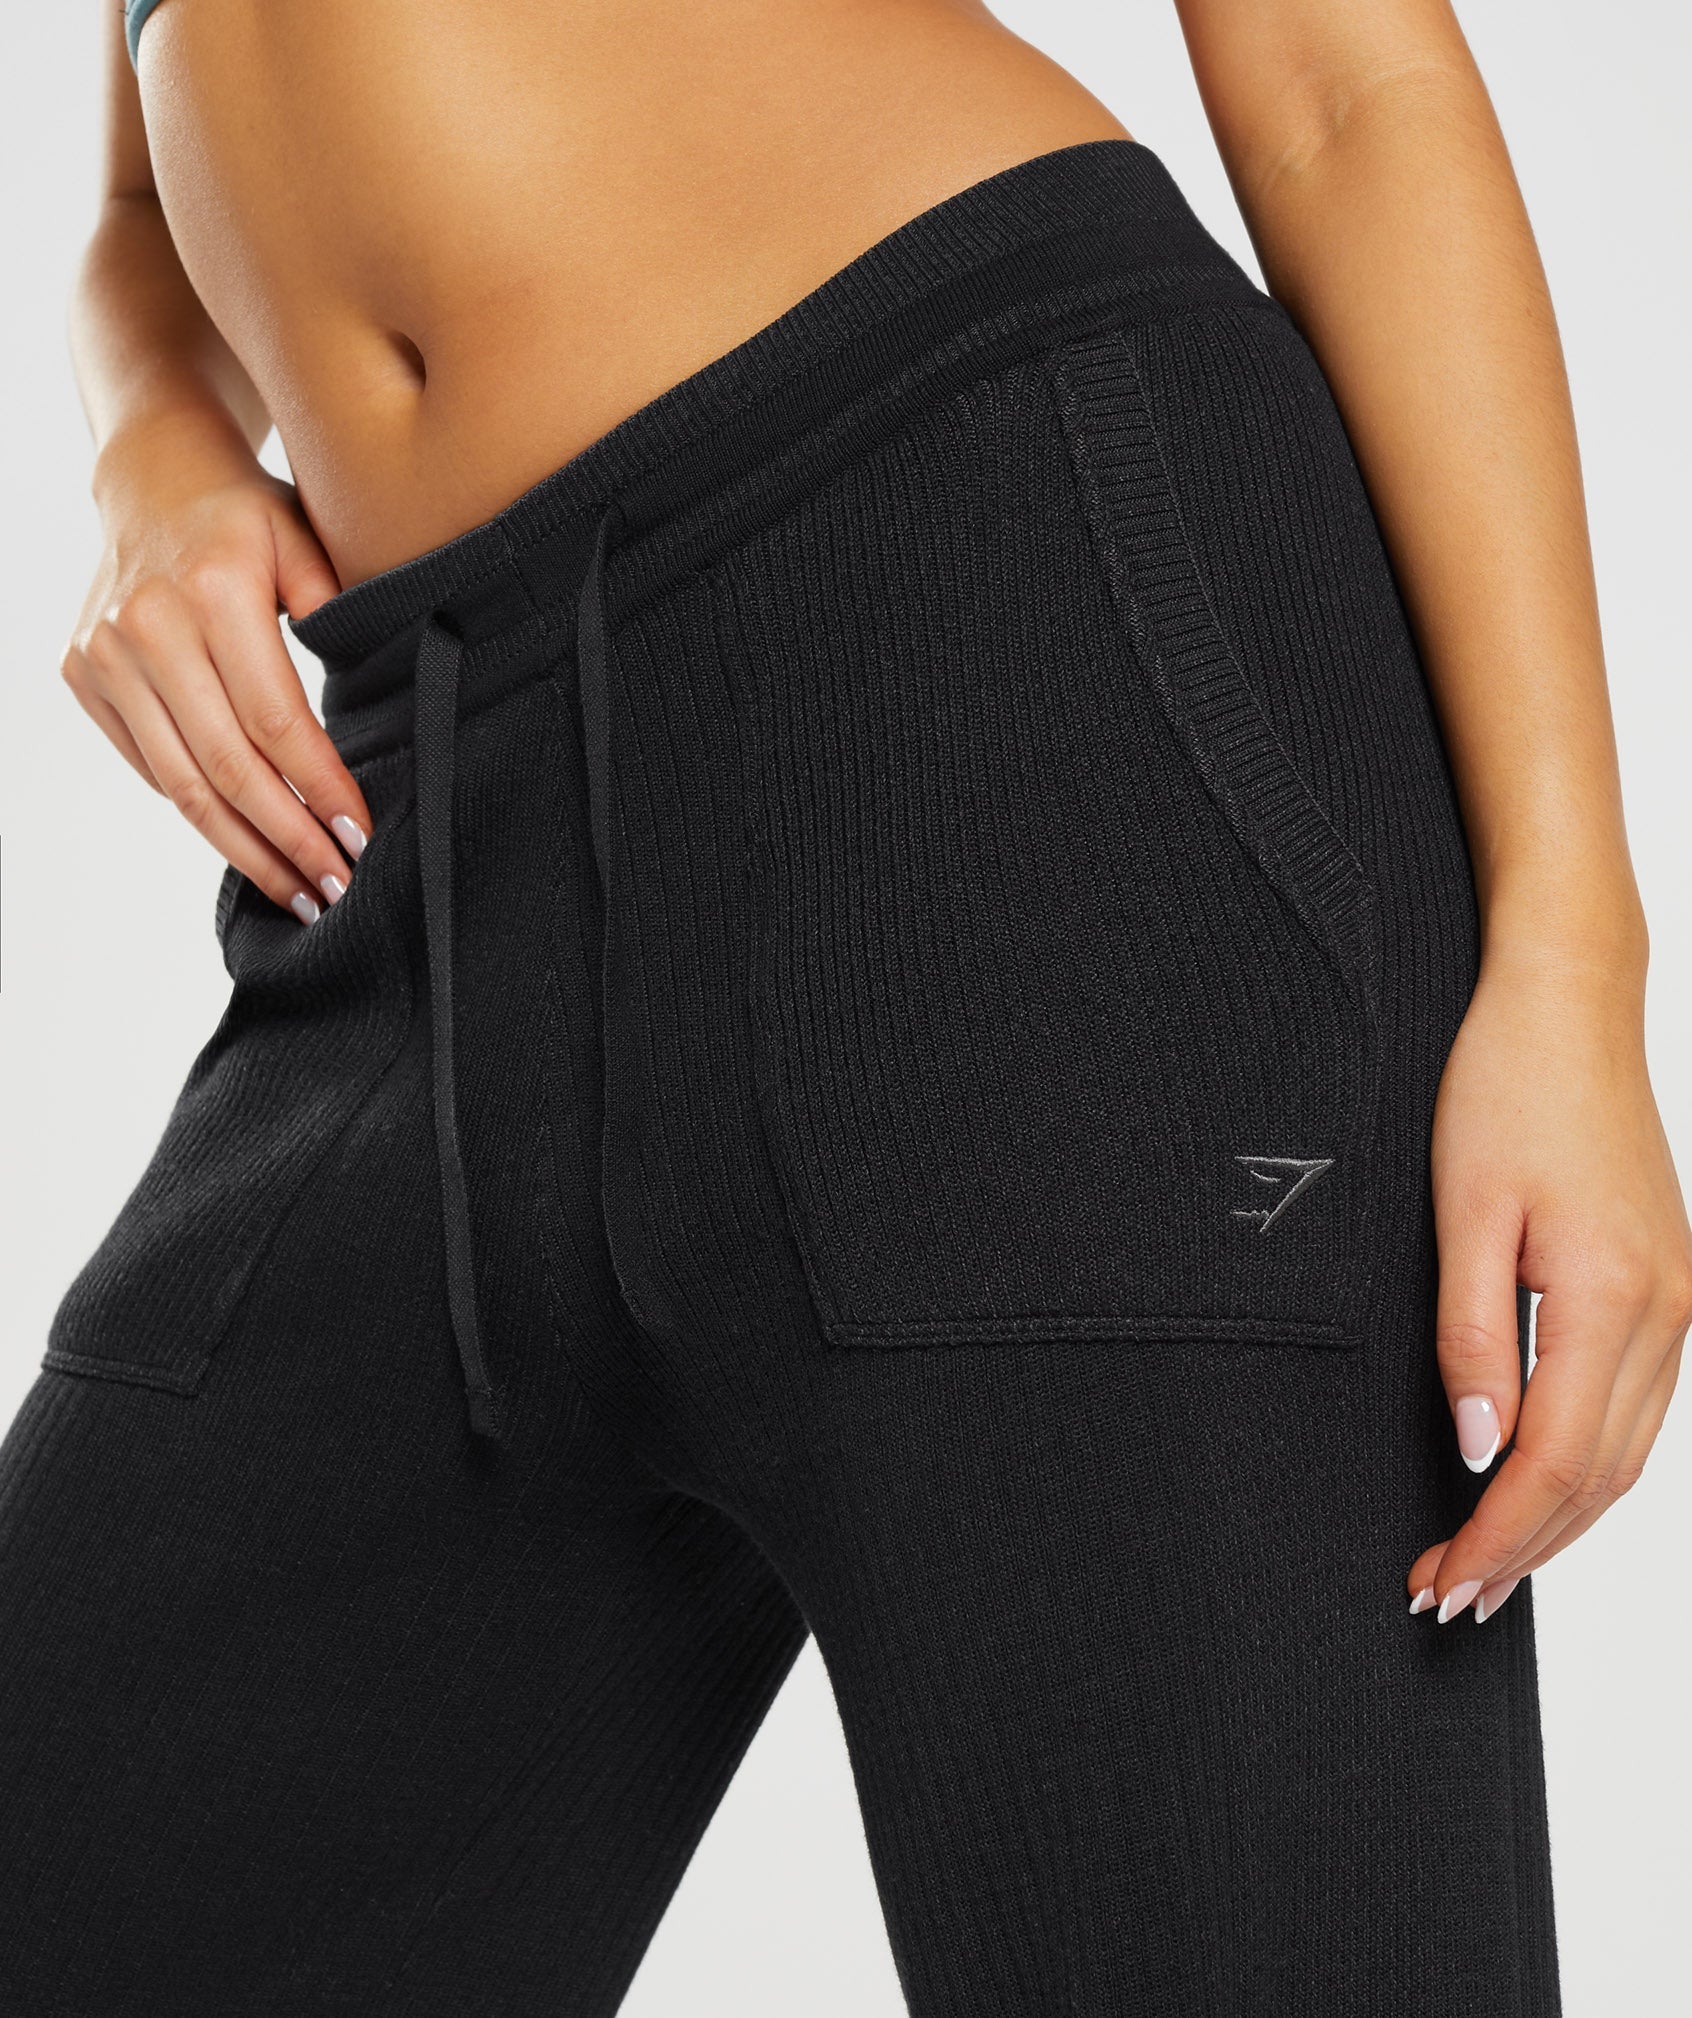 Gymshark Pause Knitwear Pants - Black/Onyx Grey